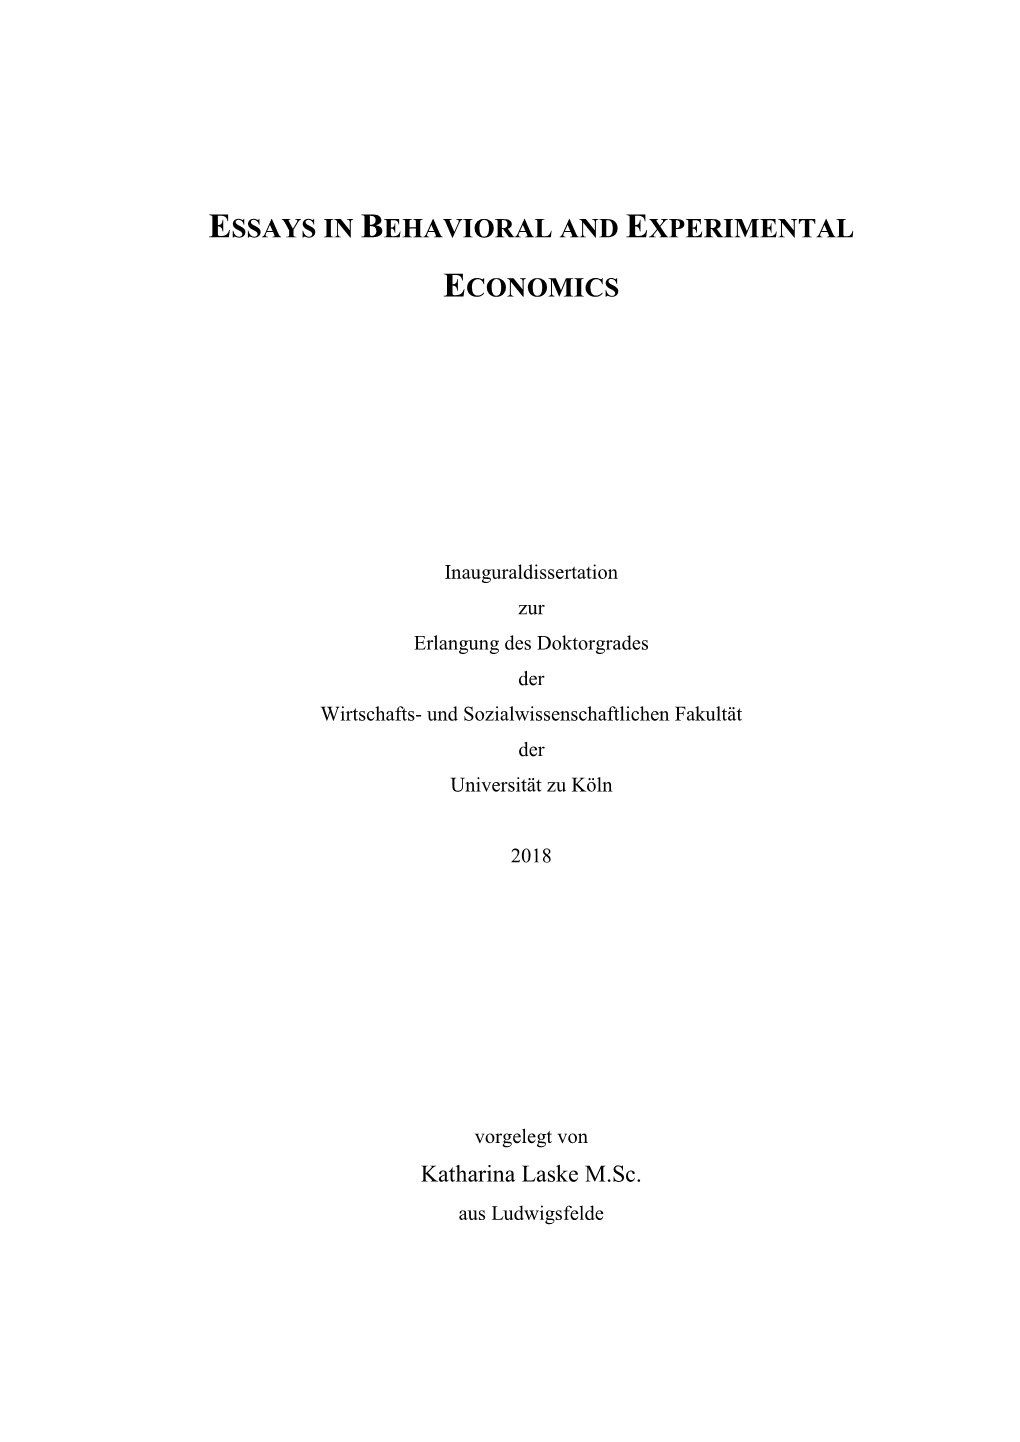 Essays in Behavioral and Experimental Economics